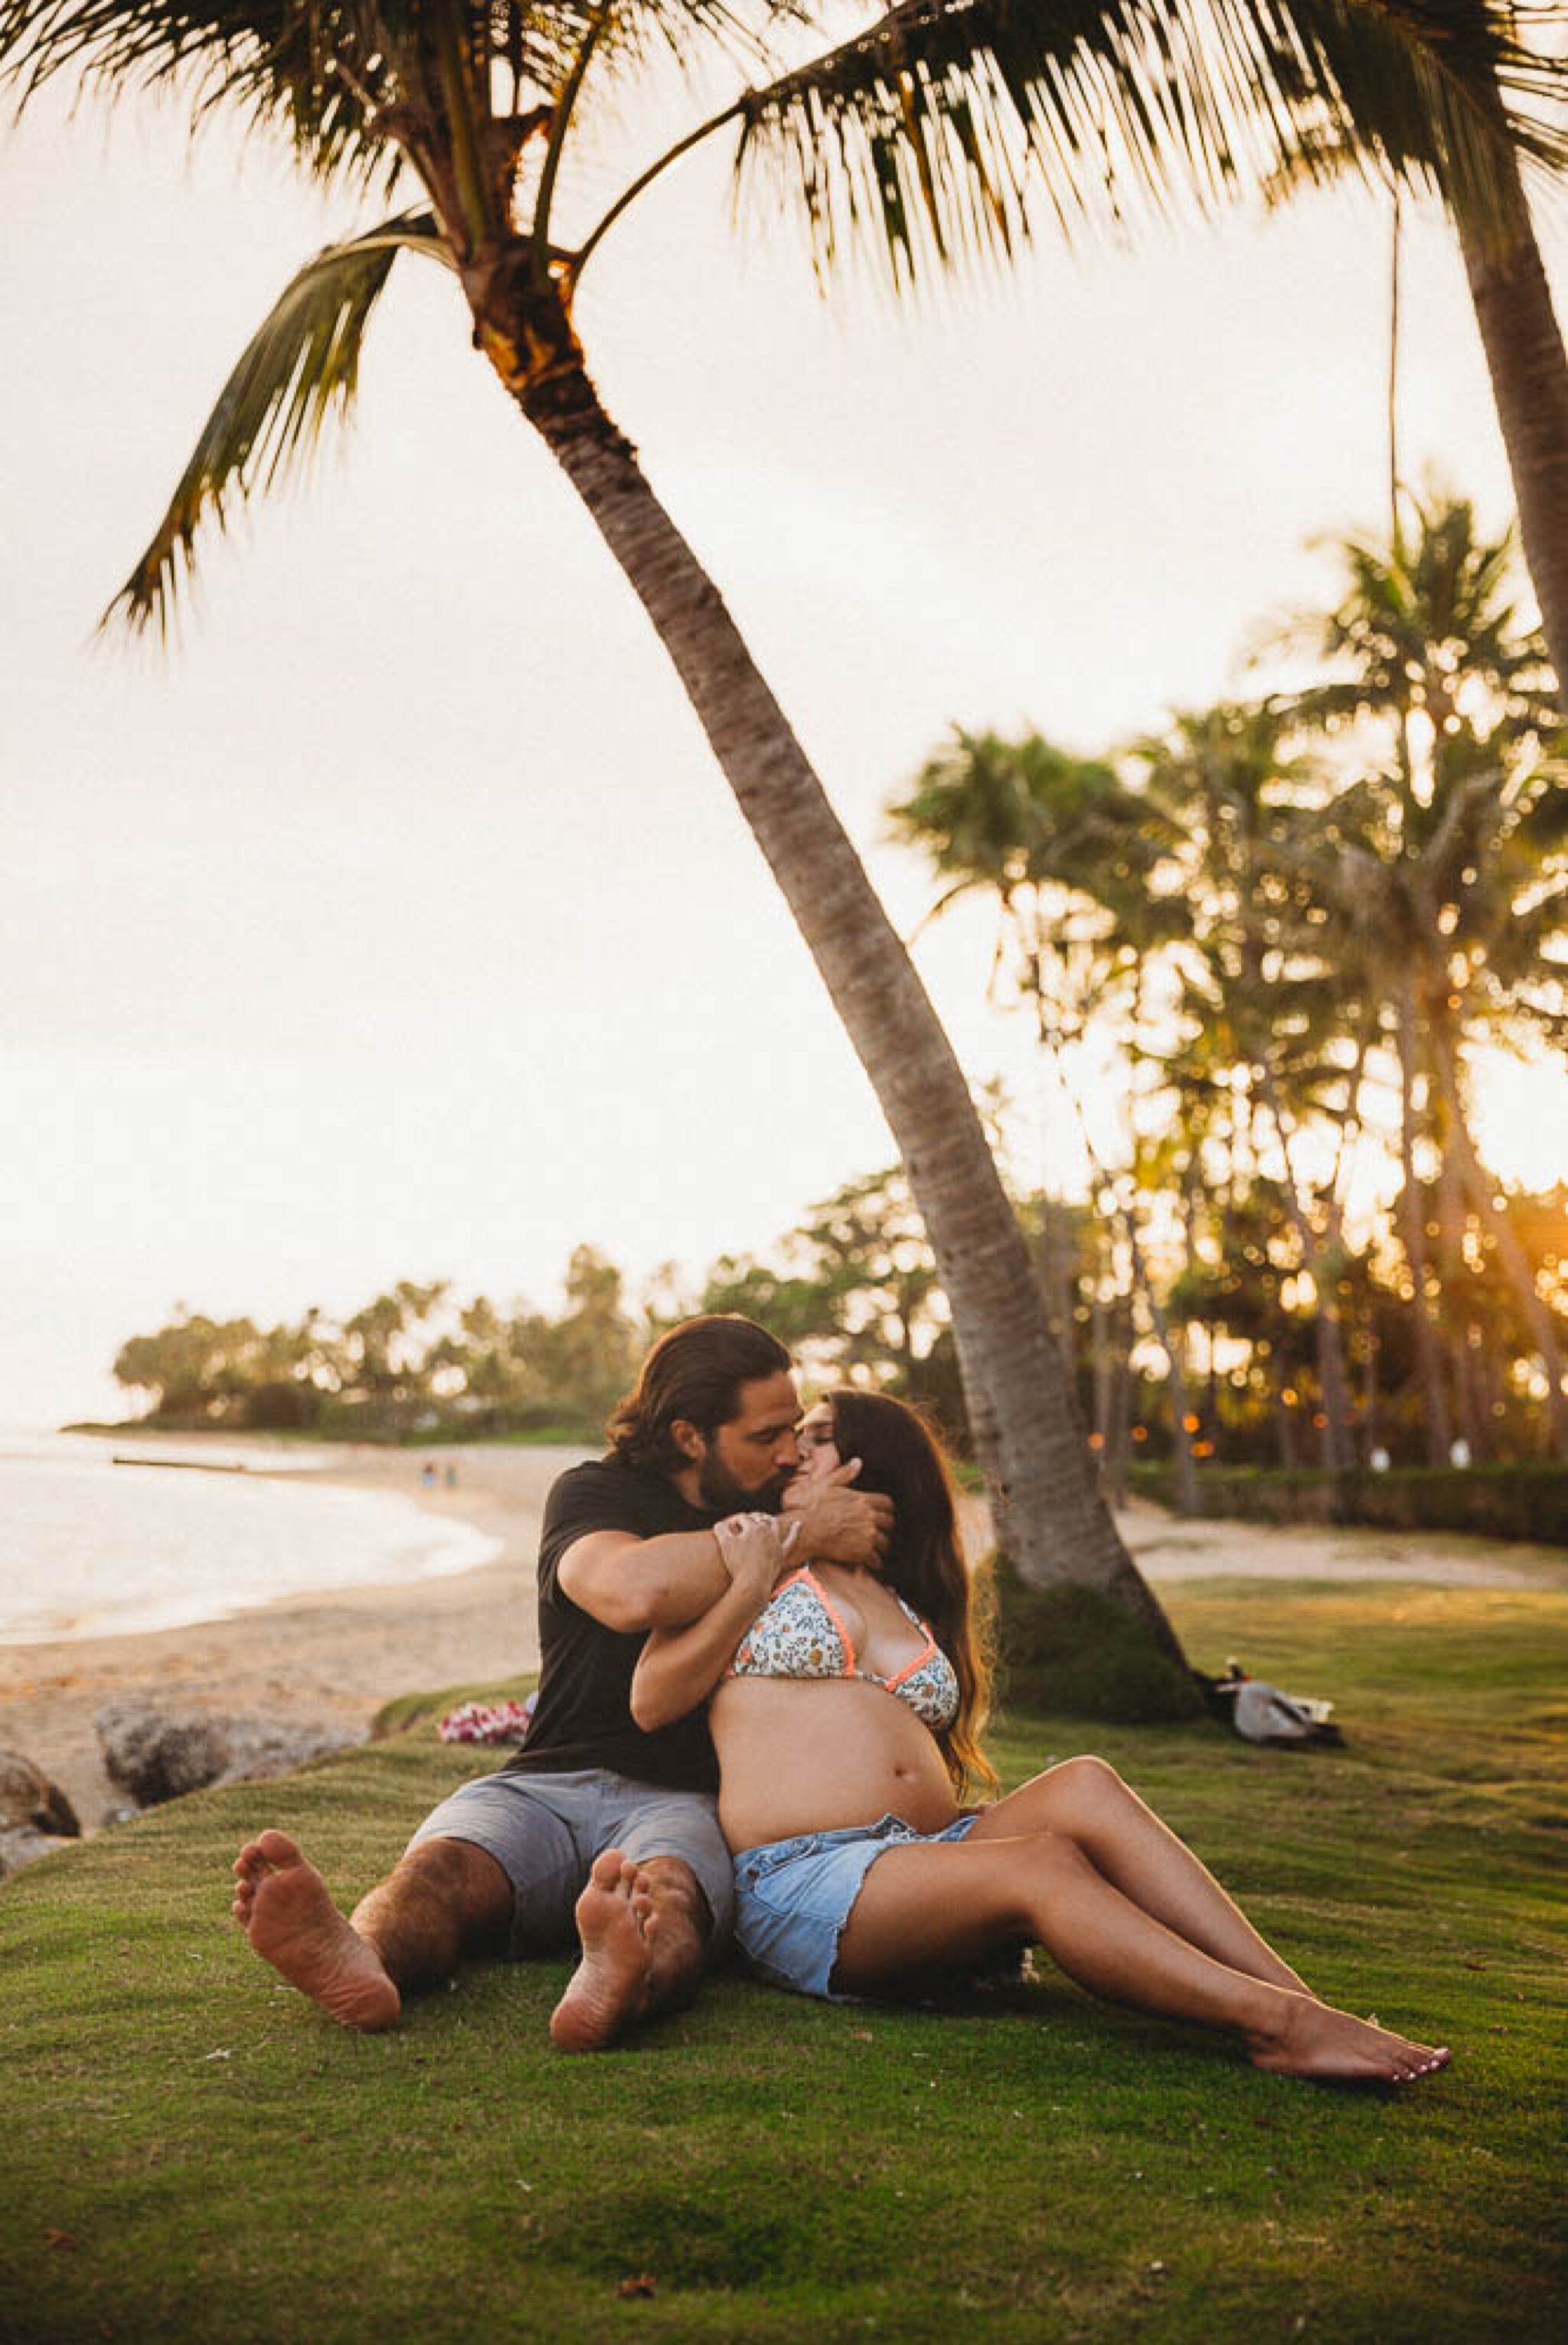 Sunset Maternity Photography Session at Kahala Beach in Oahu - Hawaii Family Photographer - Johanna Dye 5.jpg